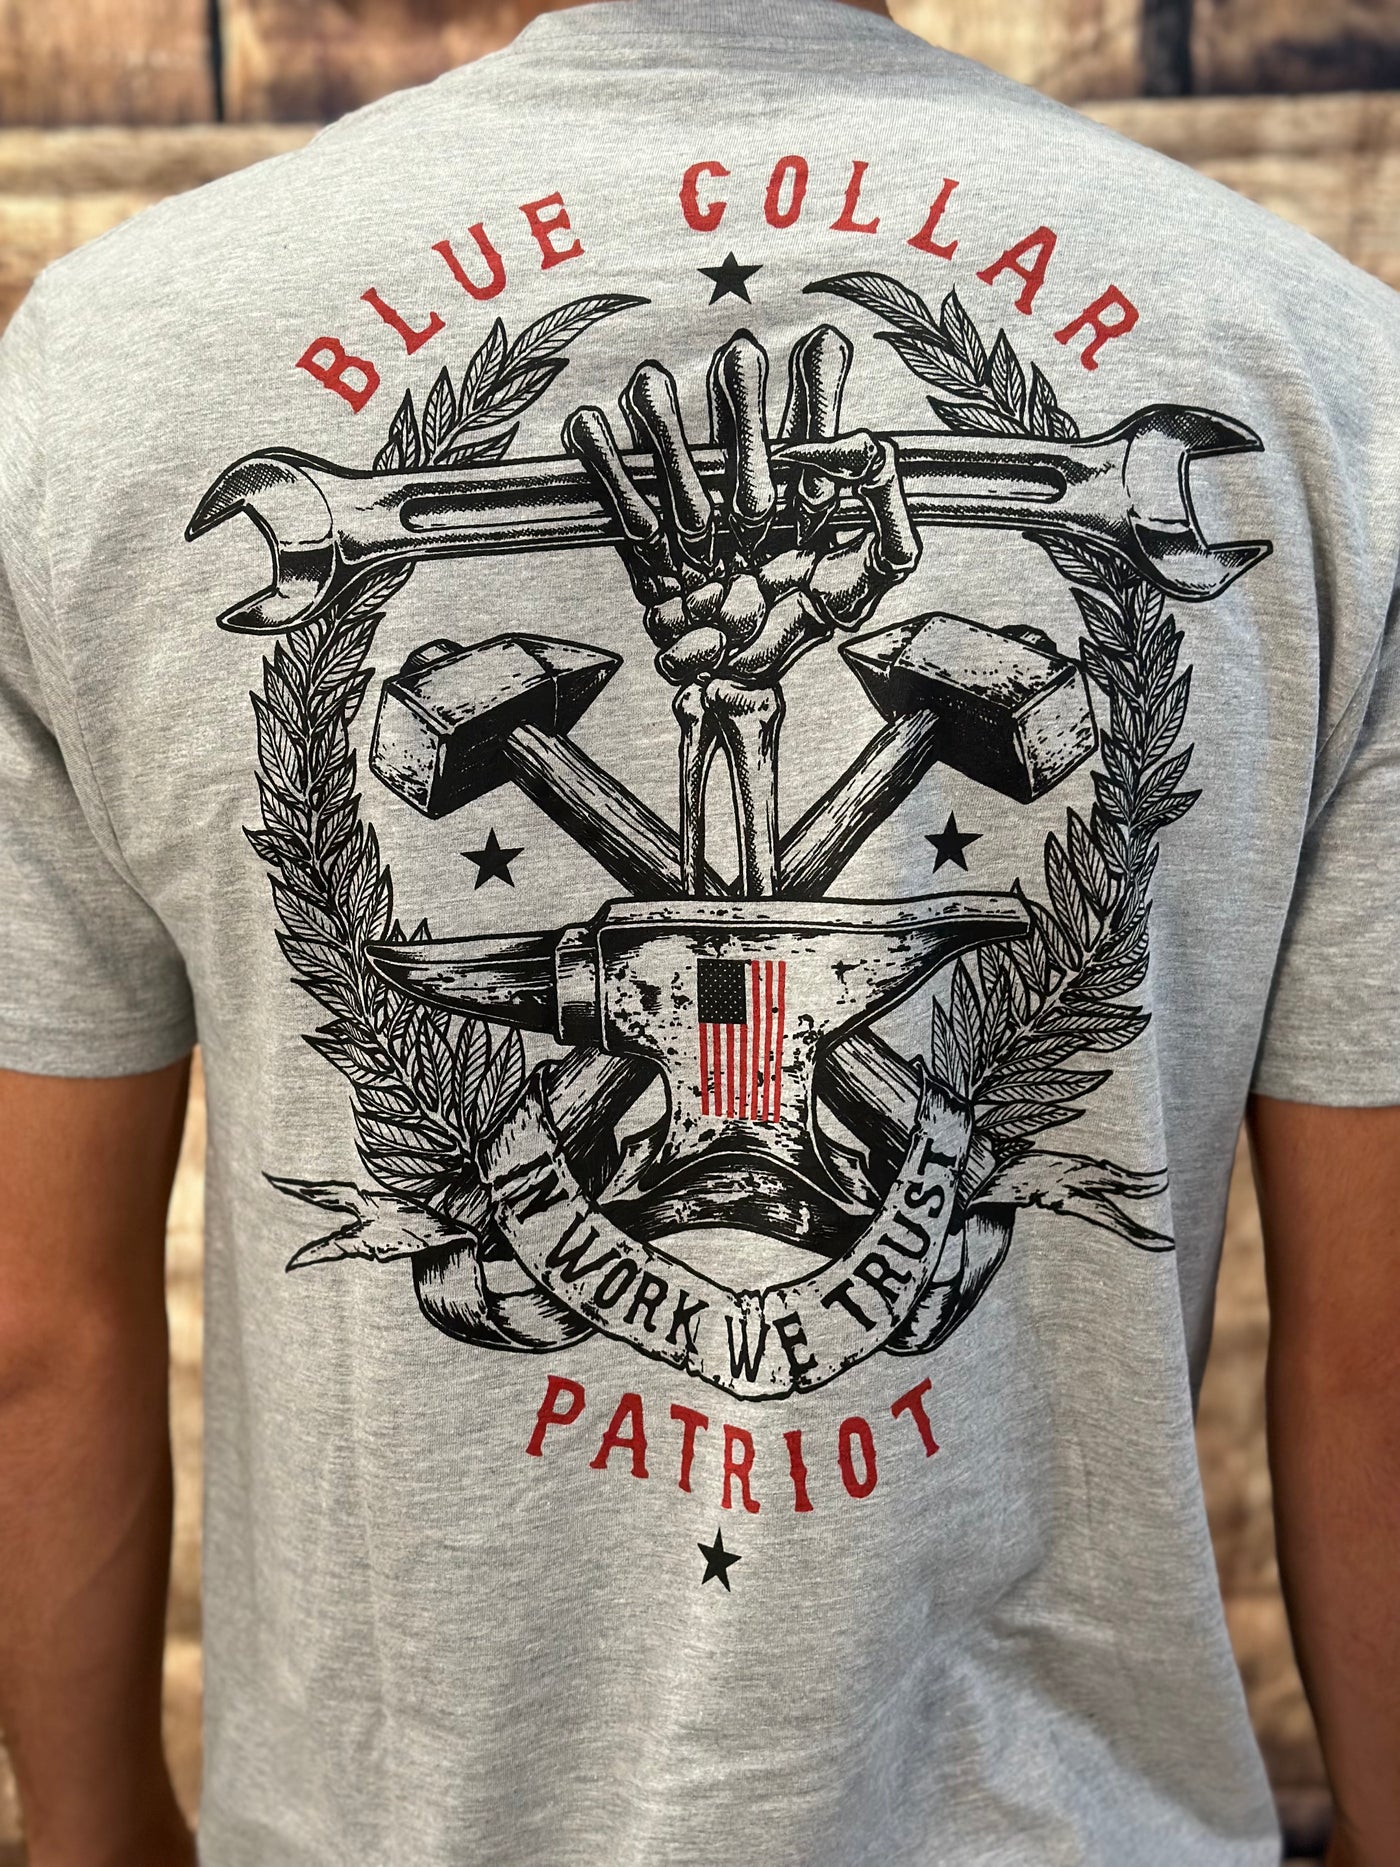 Howitzer "Blue Collar Patriot" Grey Short Sleeve Graphic